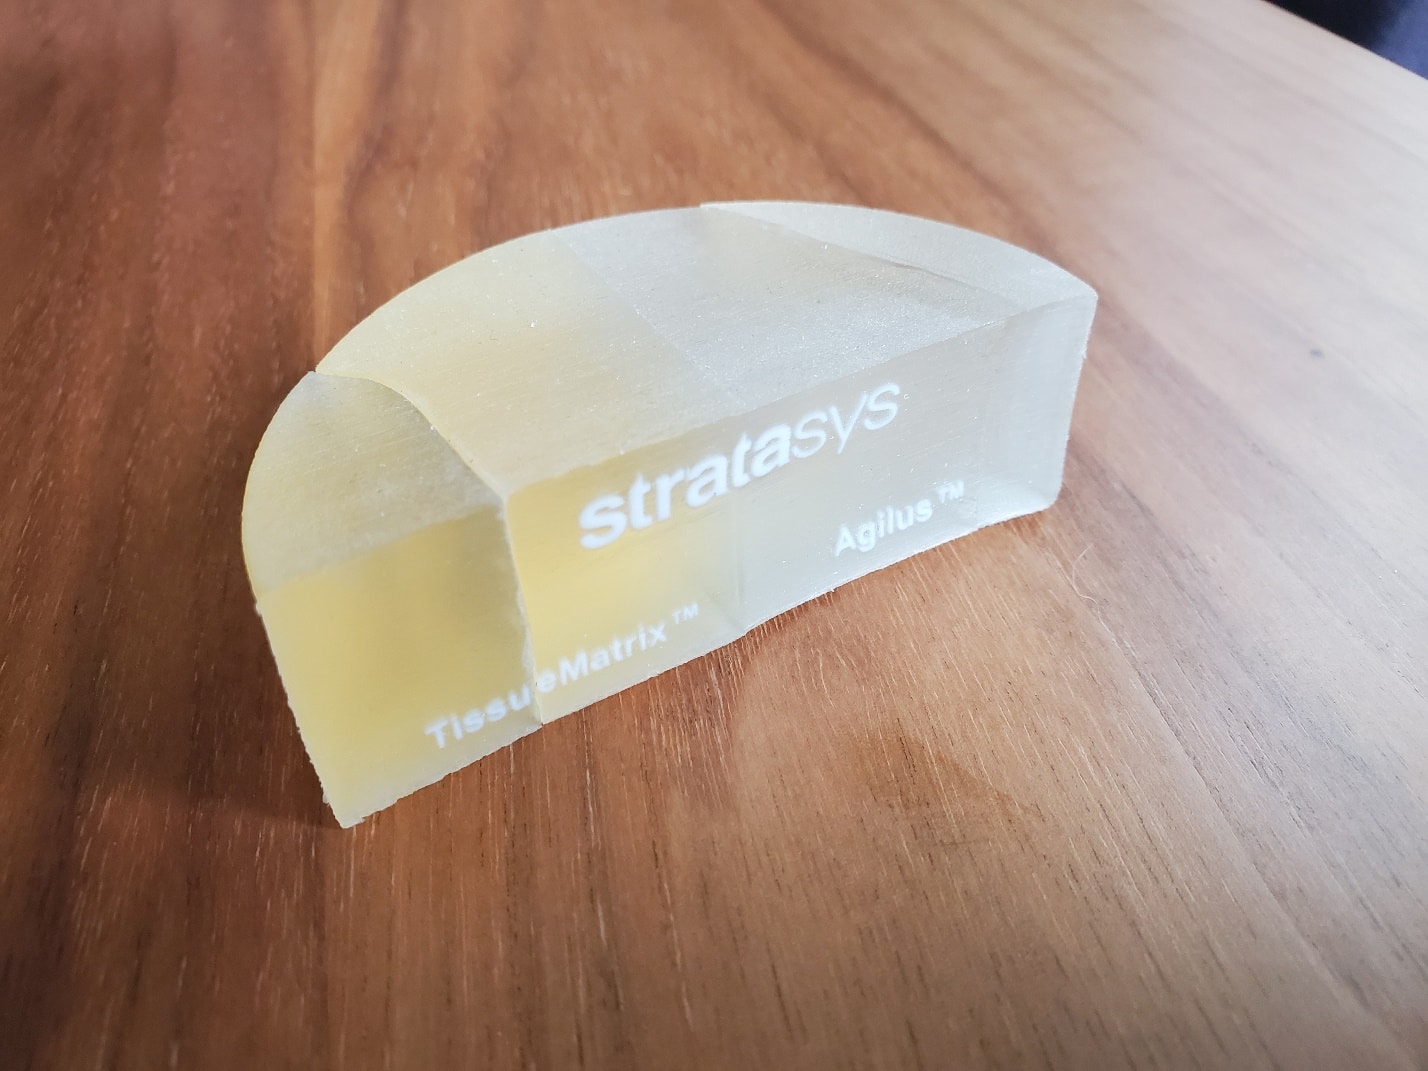 , Stratasys Digital Anatomy 3D Printer: Tissue Matrix Deep Dive